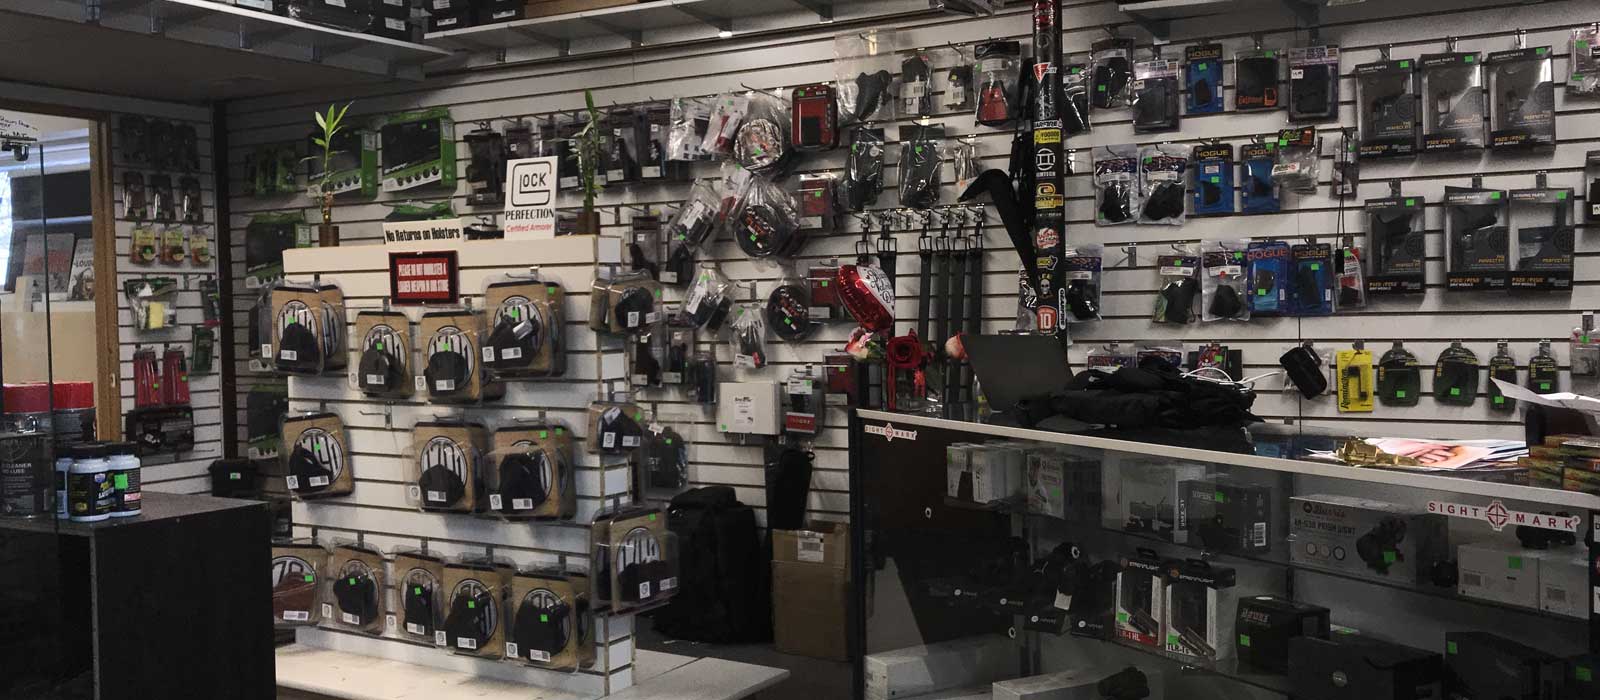 Shop Handgun Accessories at Ctr Firearms in janesville, Wisconsin